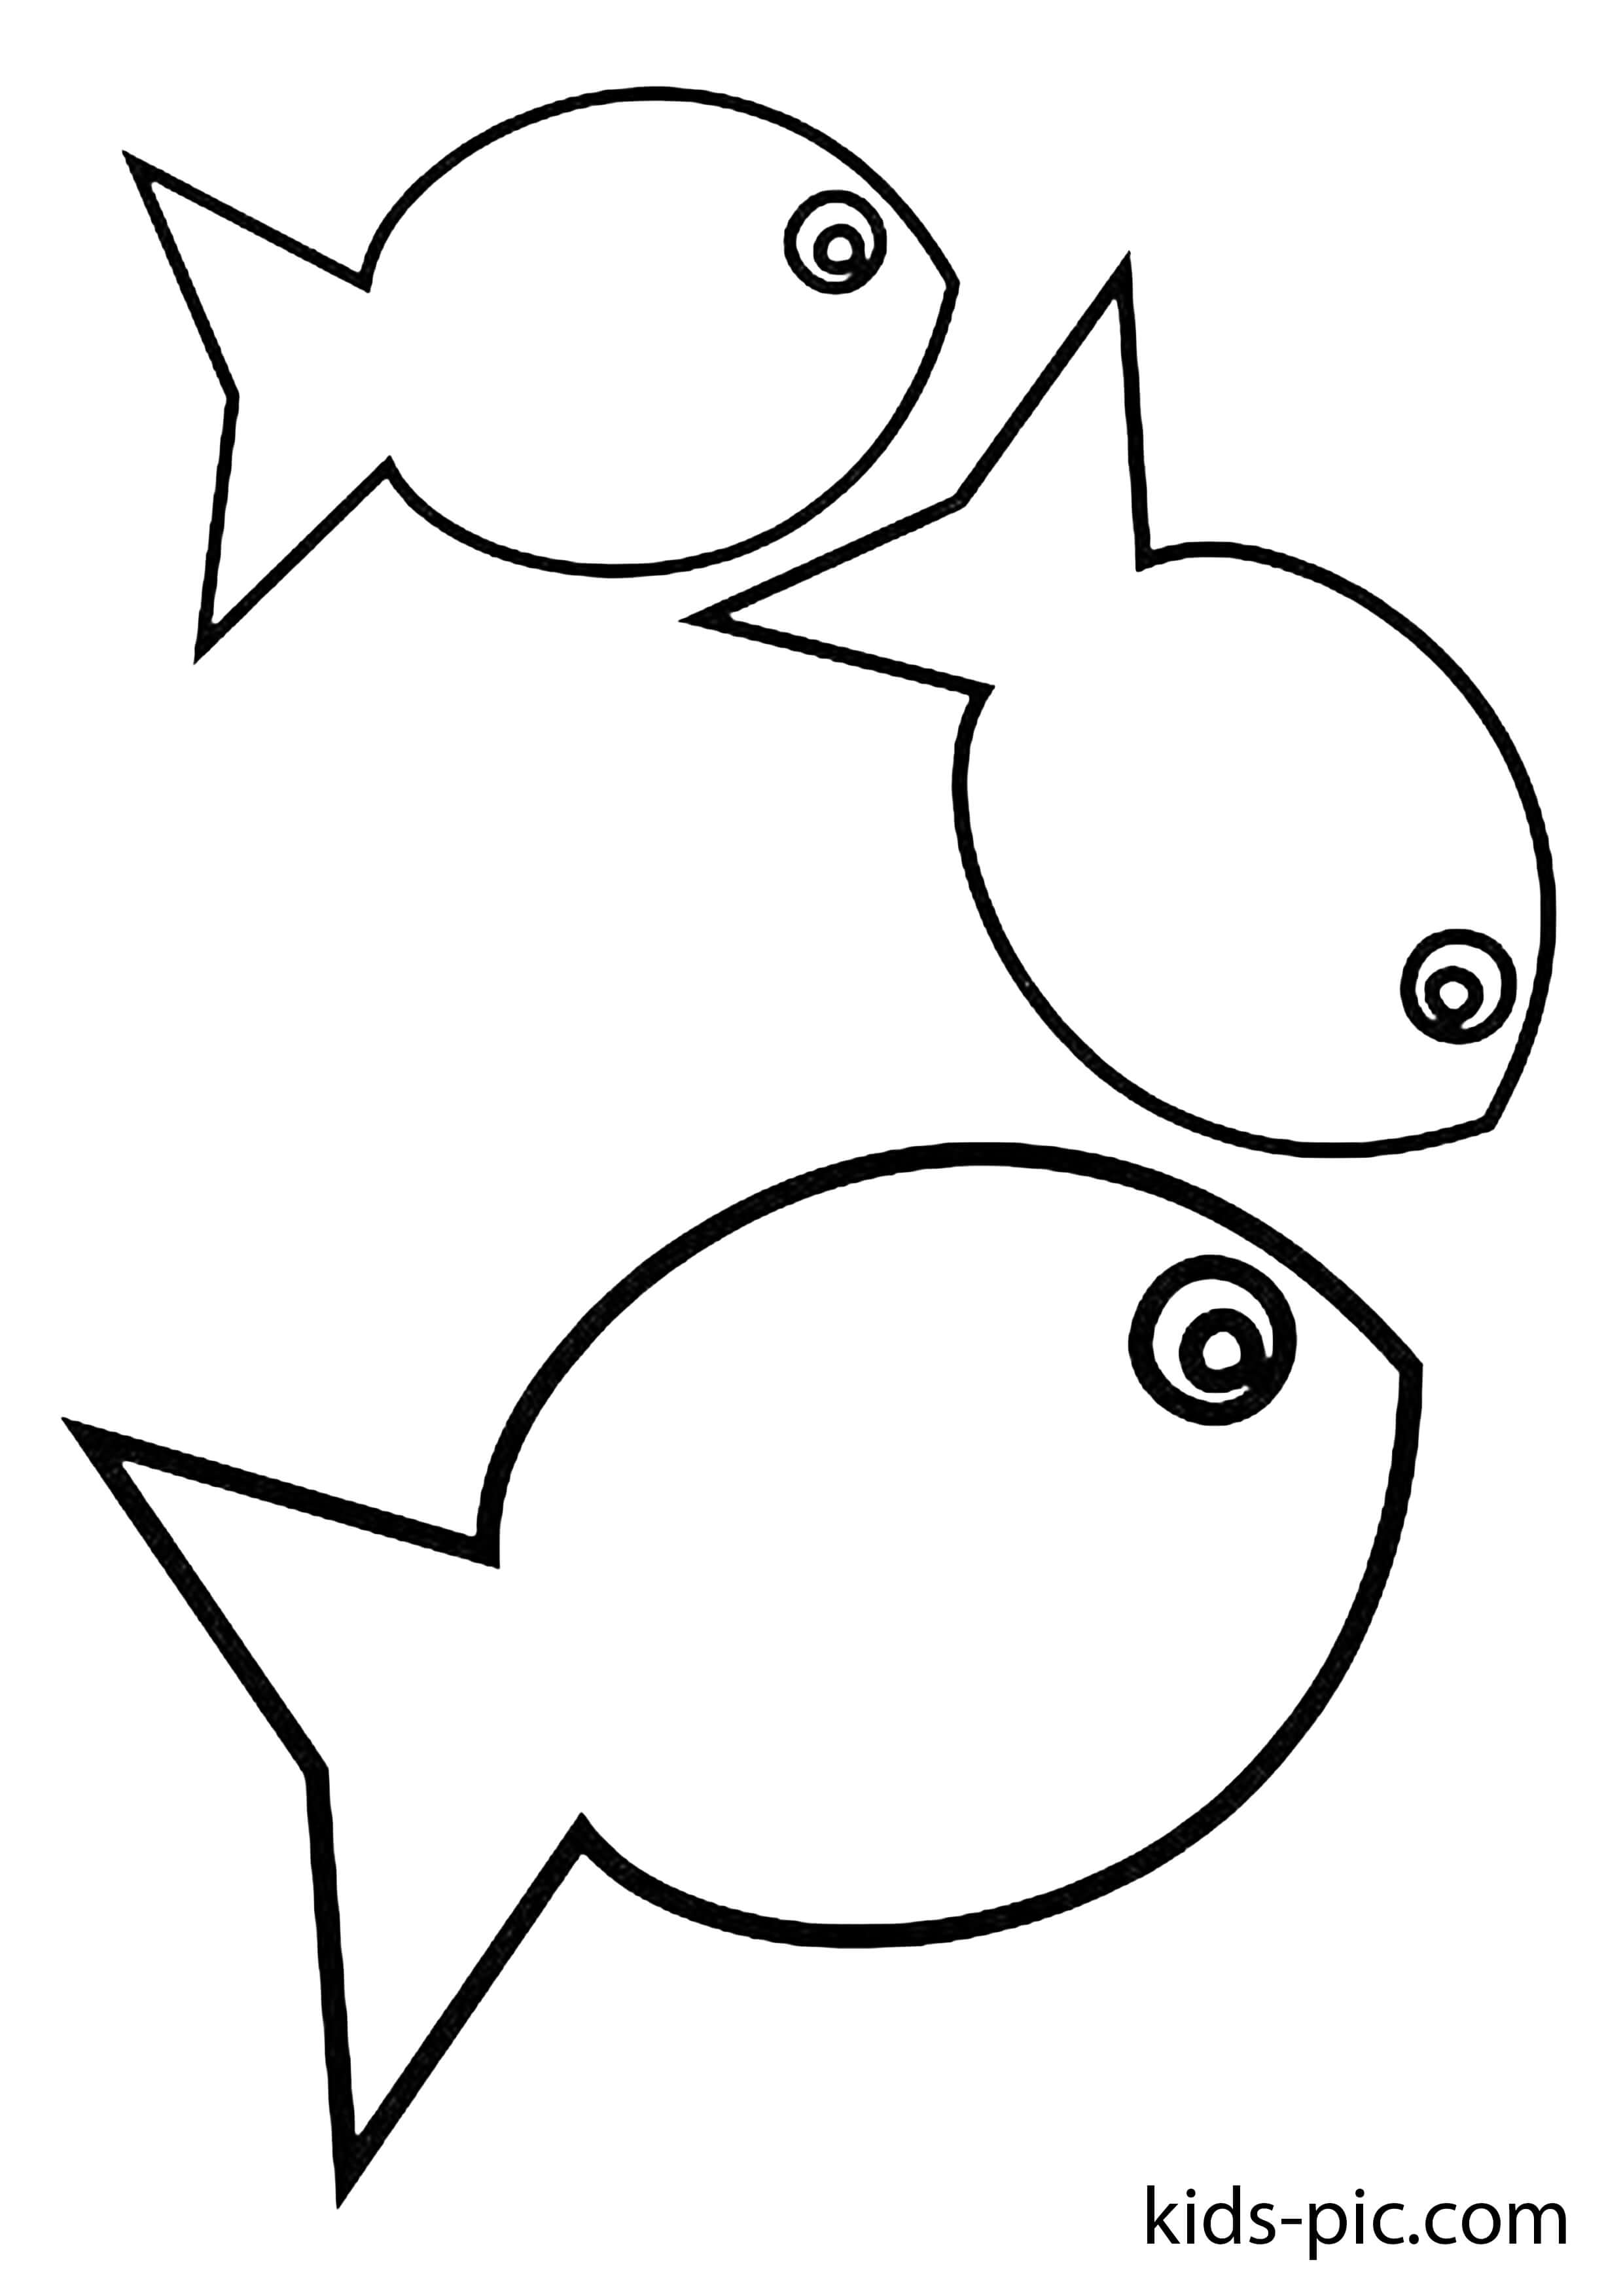 fish templates to print